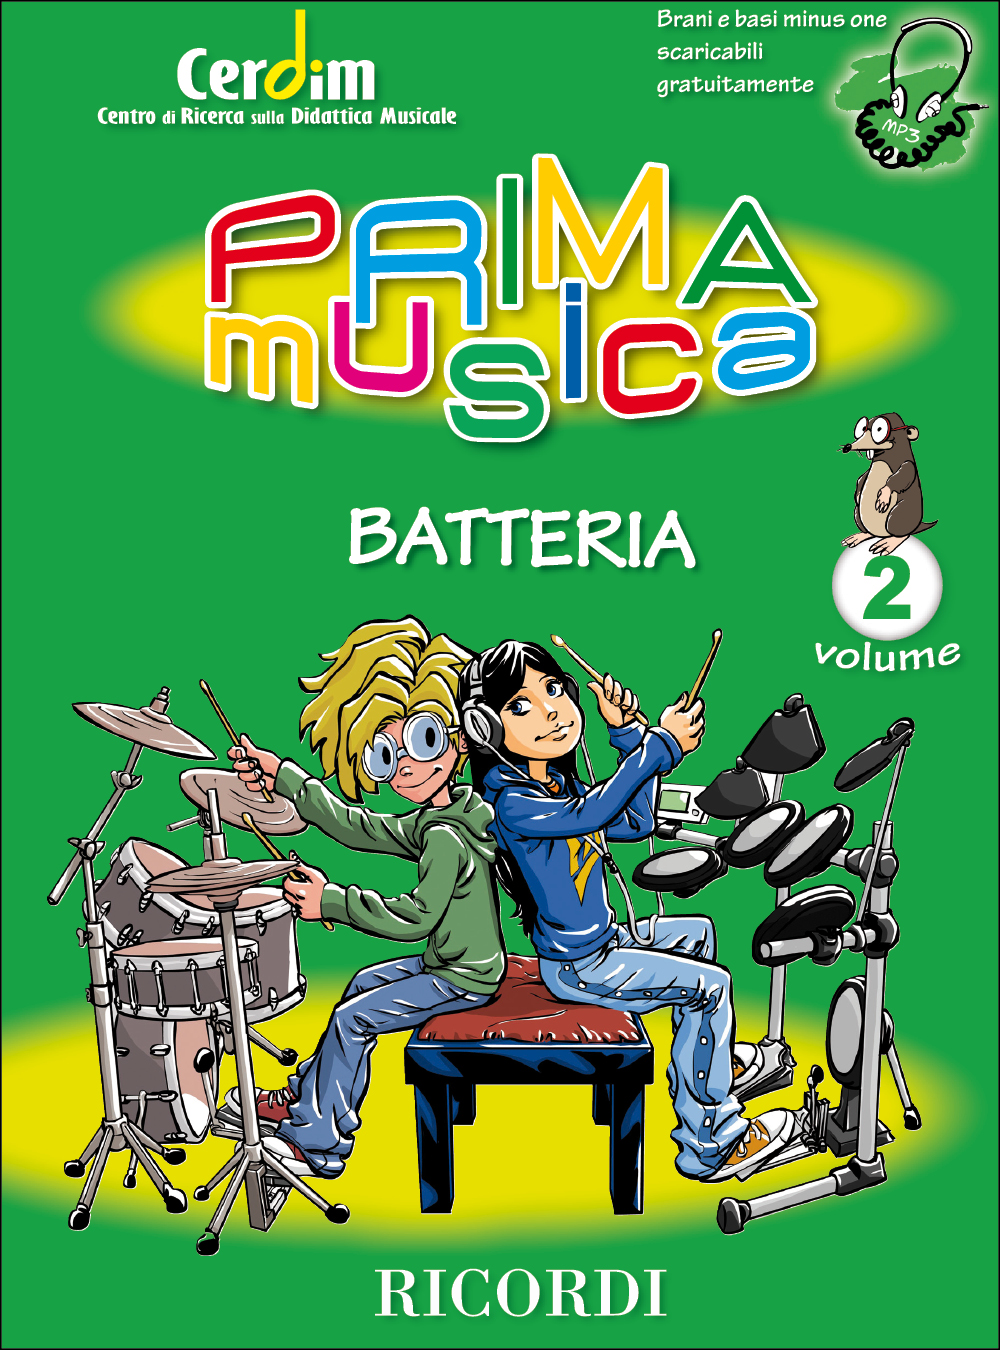 Giovanni Damiani: Primamusica: Batteria Vol.2: Drum Kit